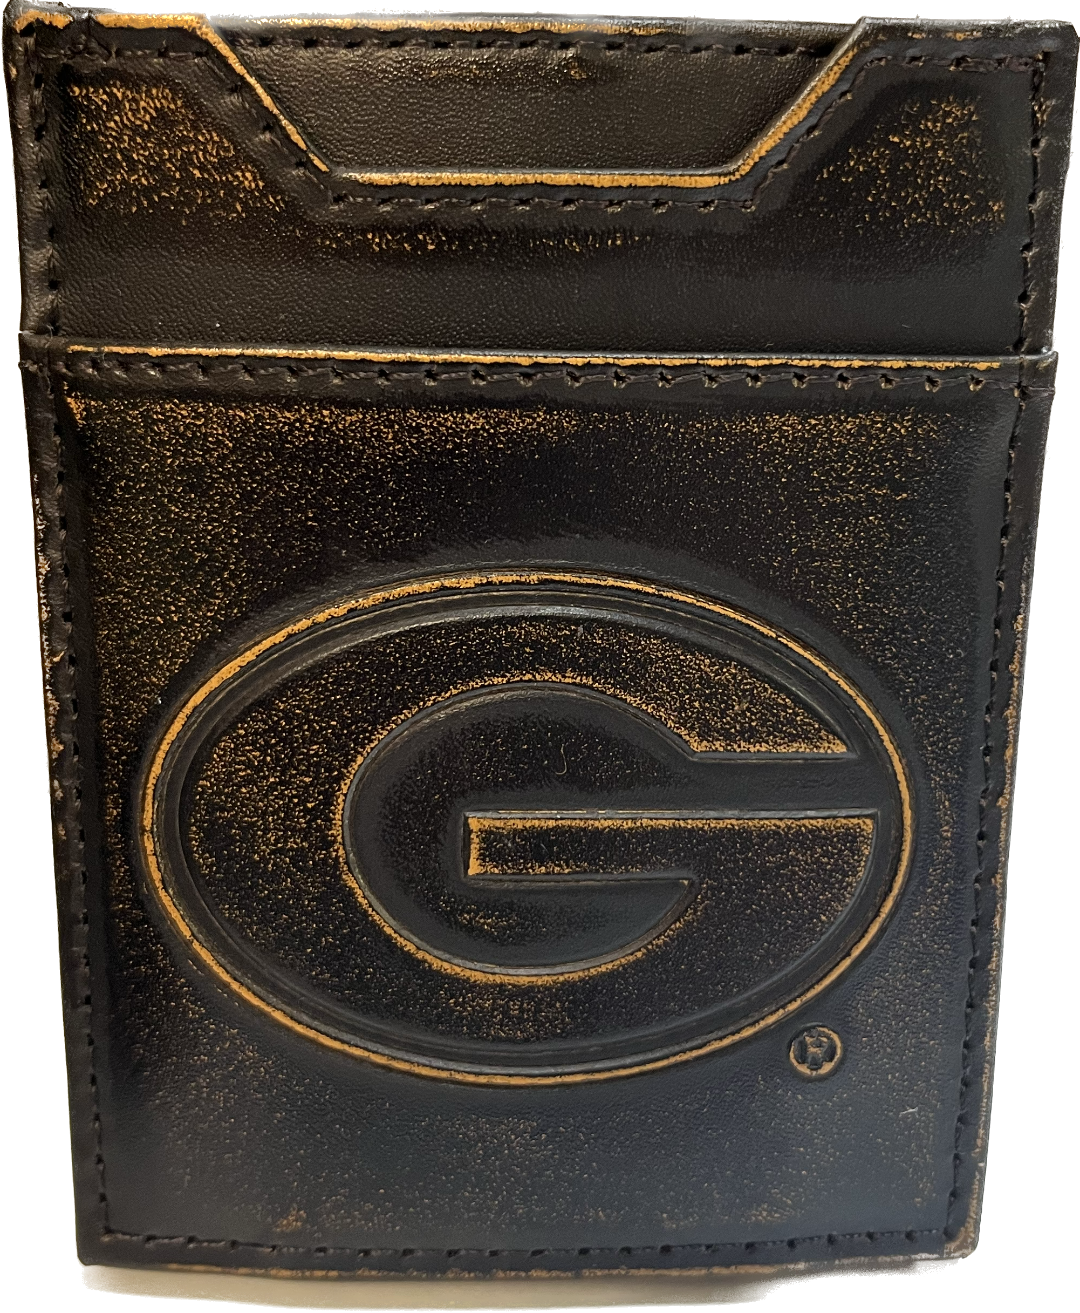 Zep-Pro Leather Georgia Card Holder